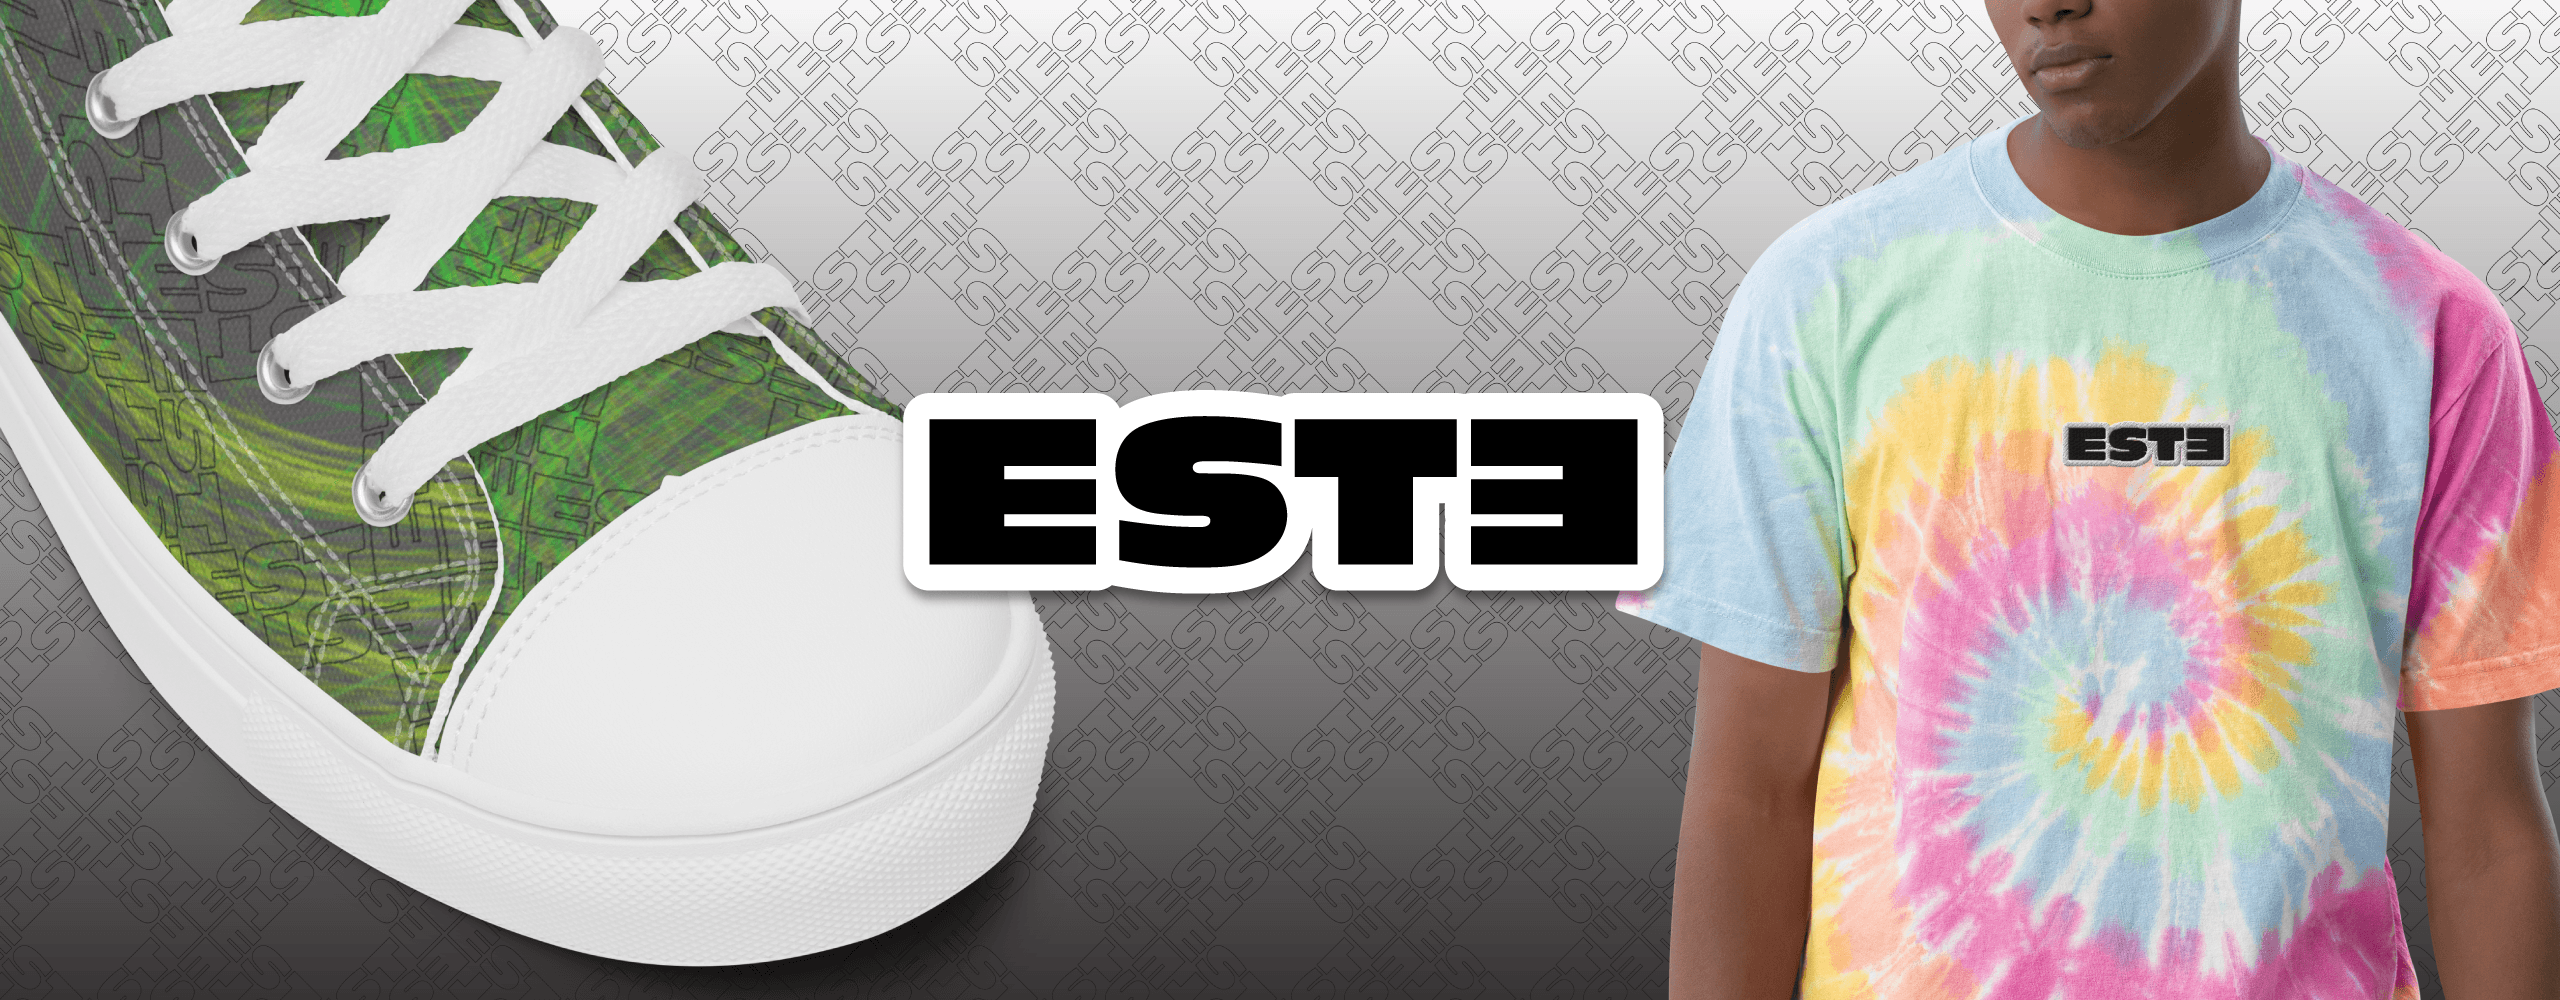 ESTE-global banner